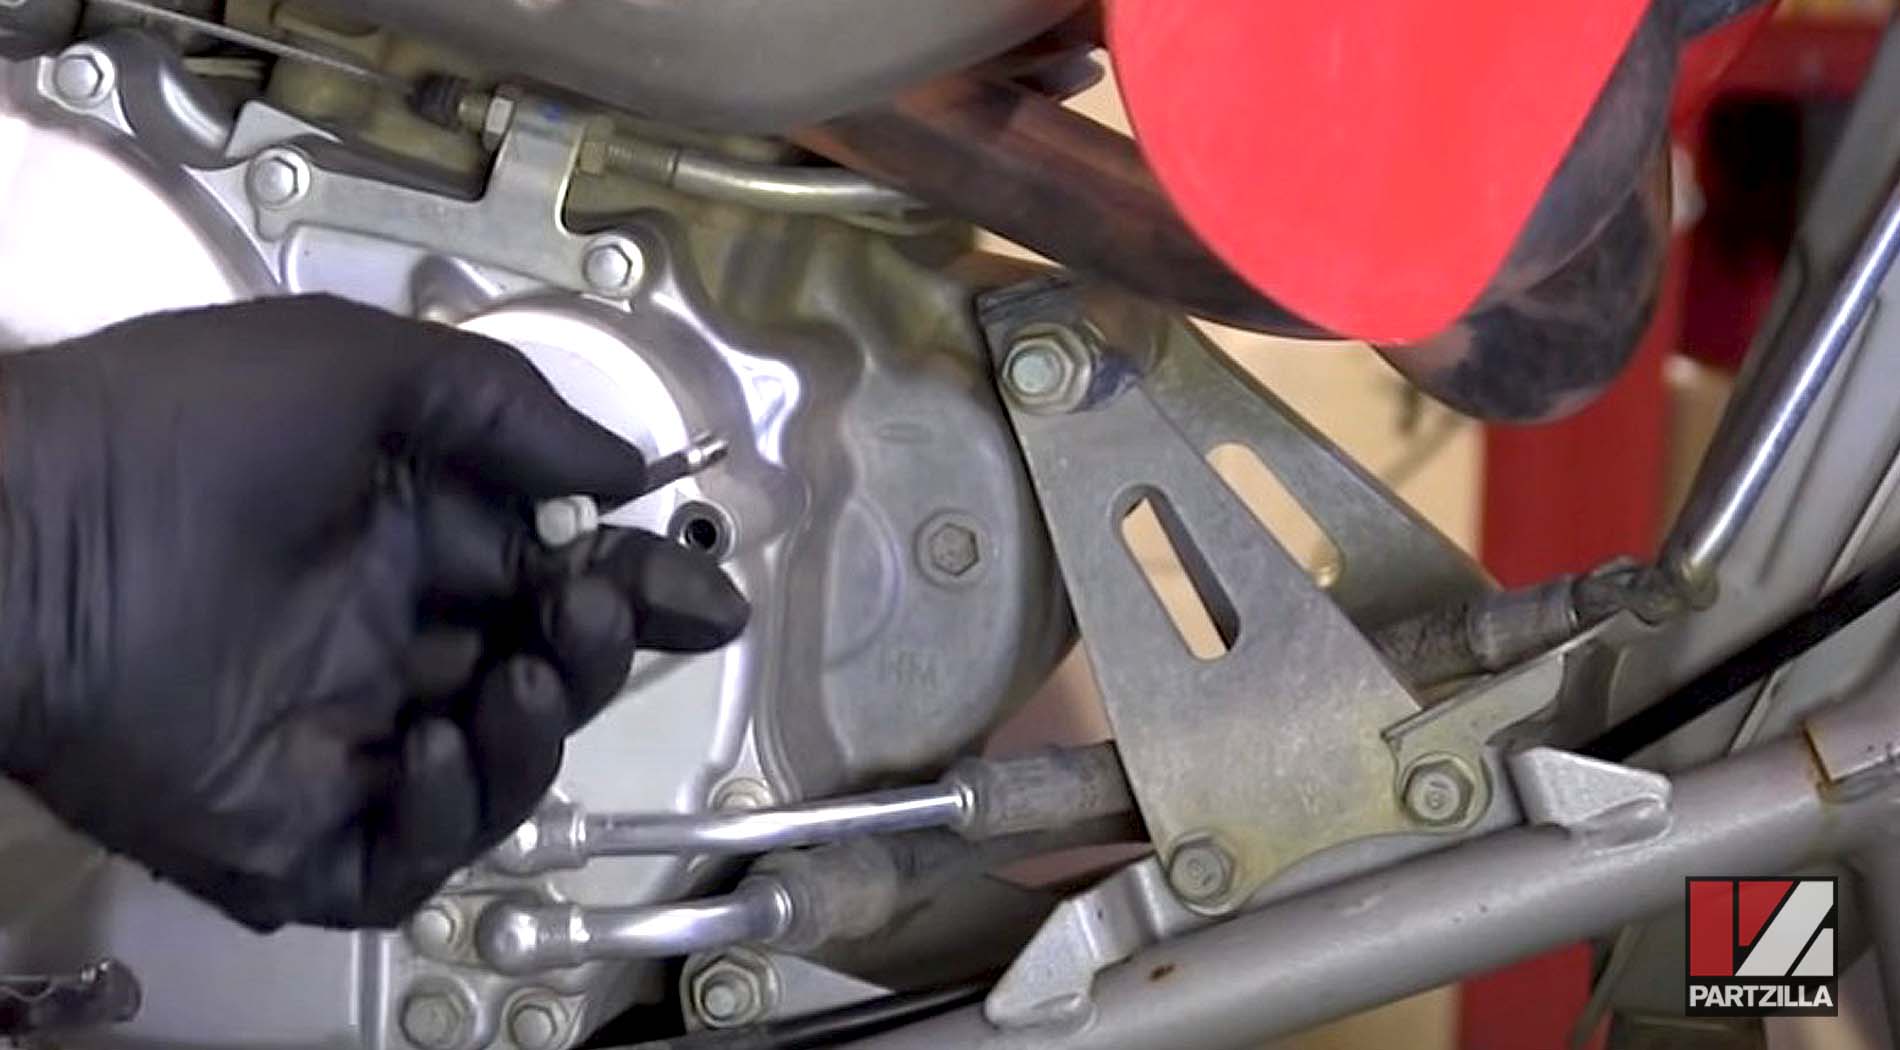 Honda TRX400 ATV oil change service